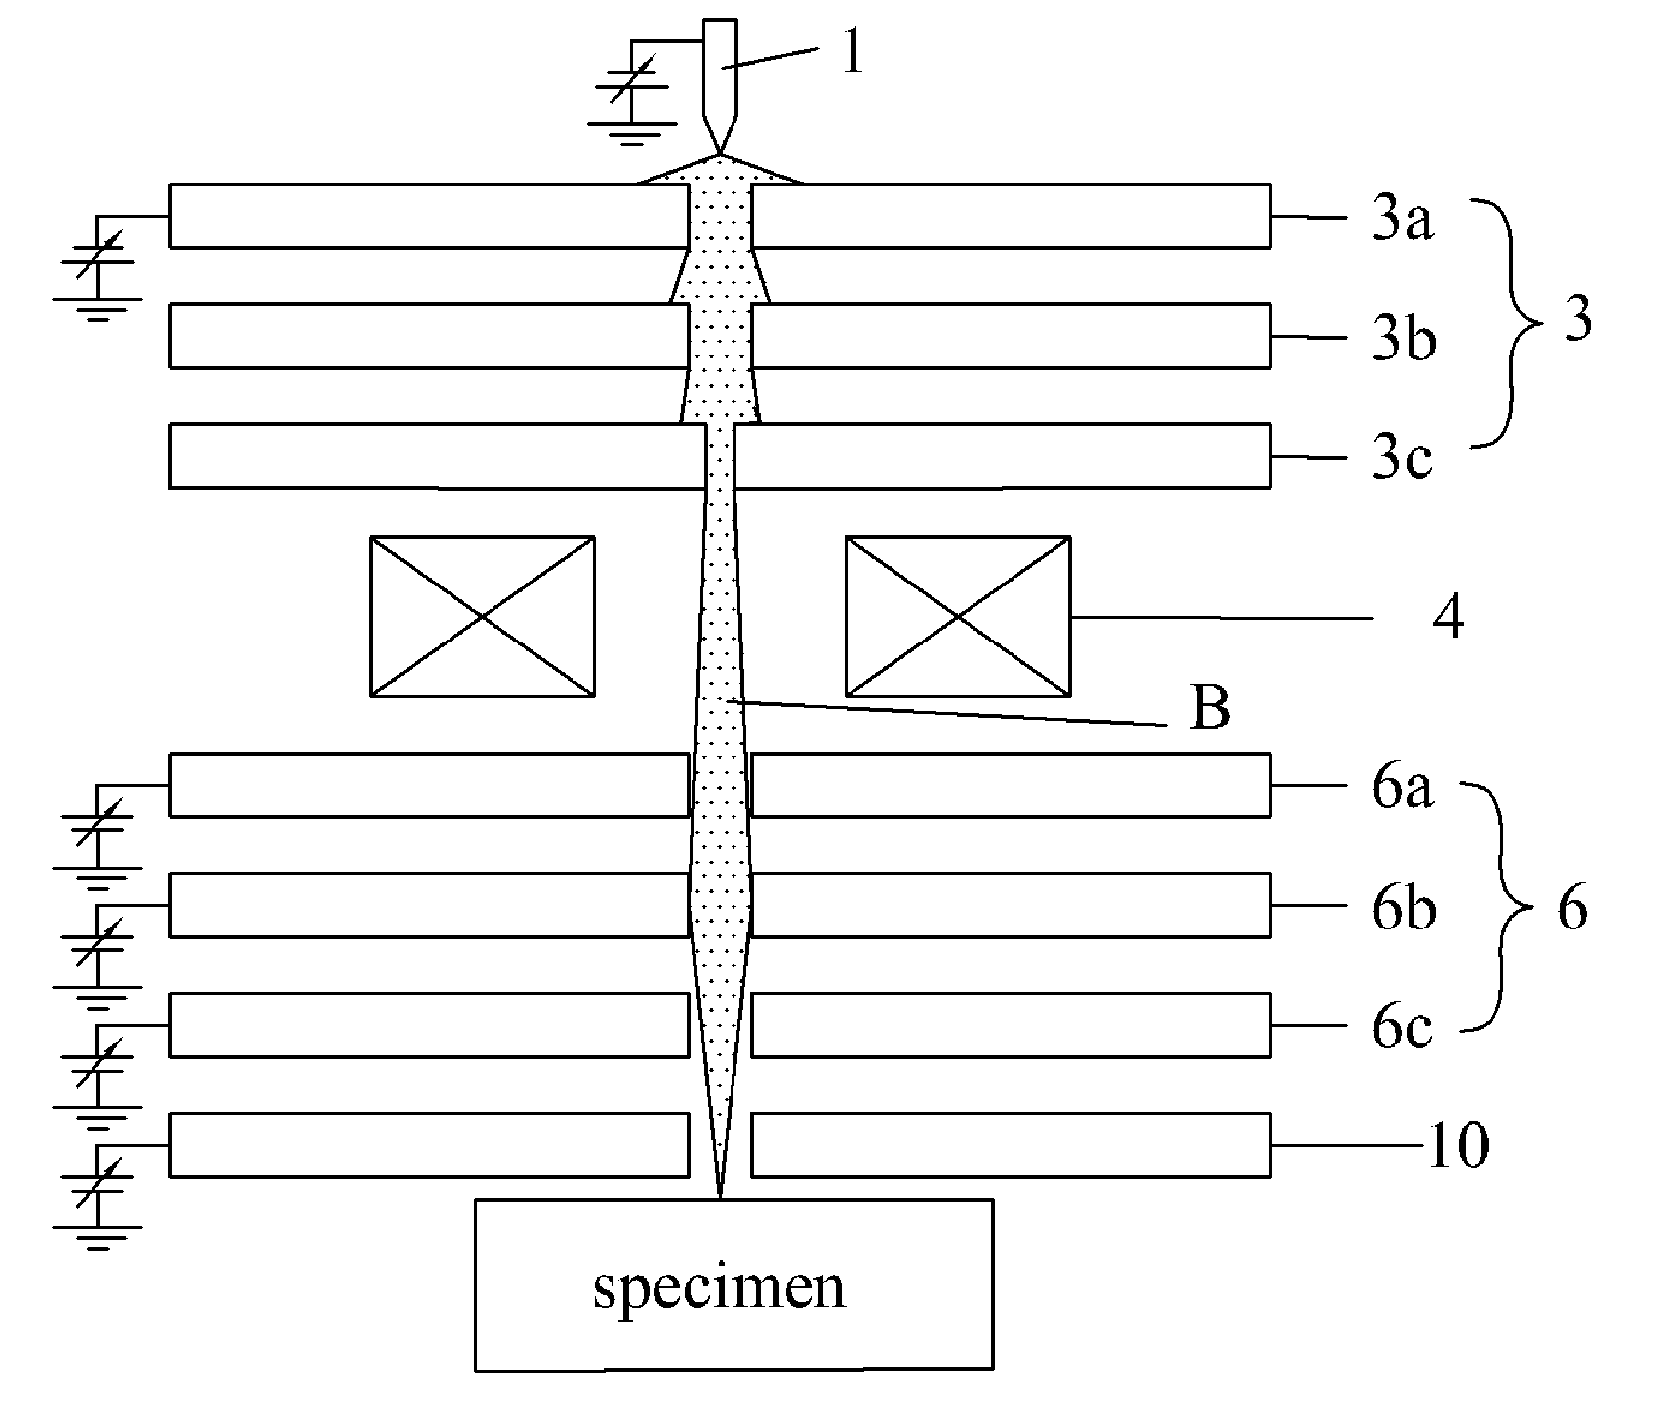 Method for focusing electron beam in electron column